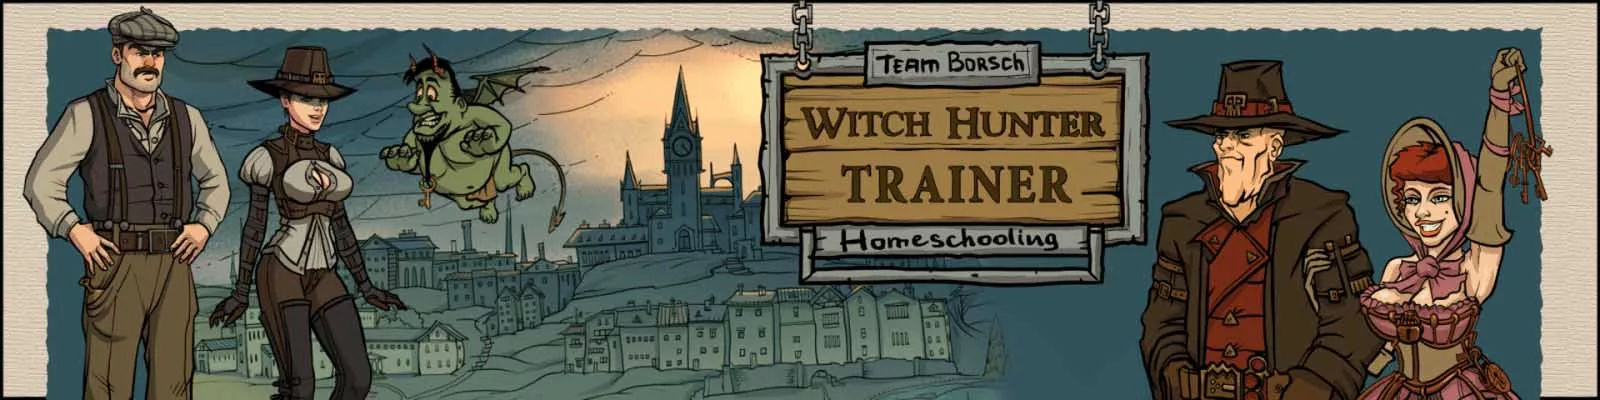 Witch Hunter Trainer 3d fullorðinsleikur